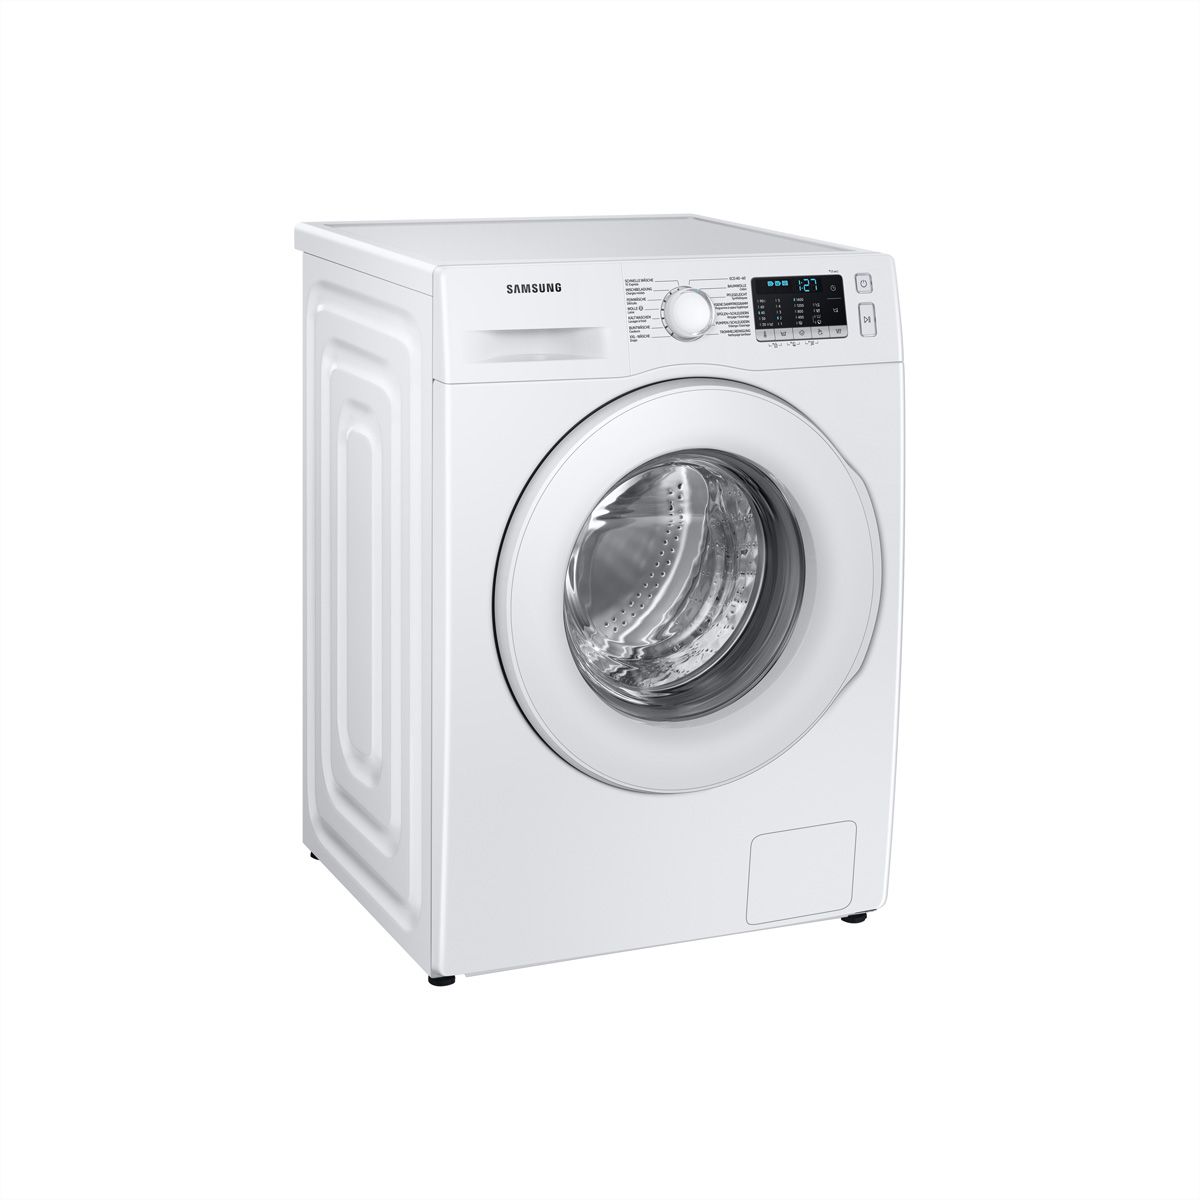 Samsung Waschmaschine WW5000, 8kg, Carved White - SECOMP AG